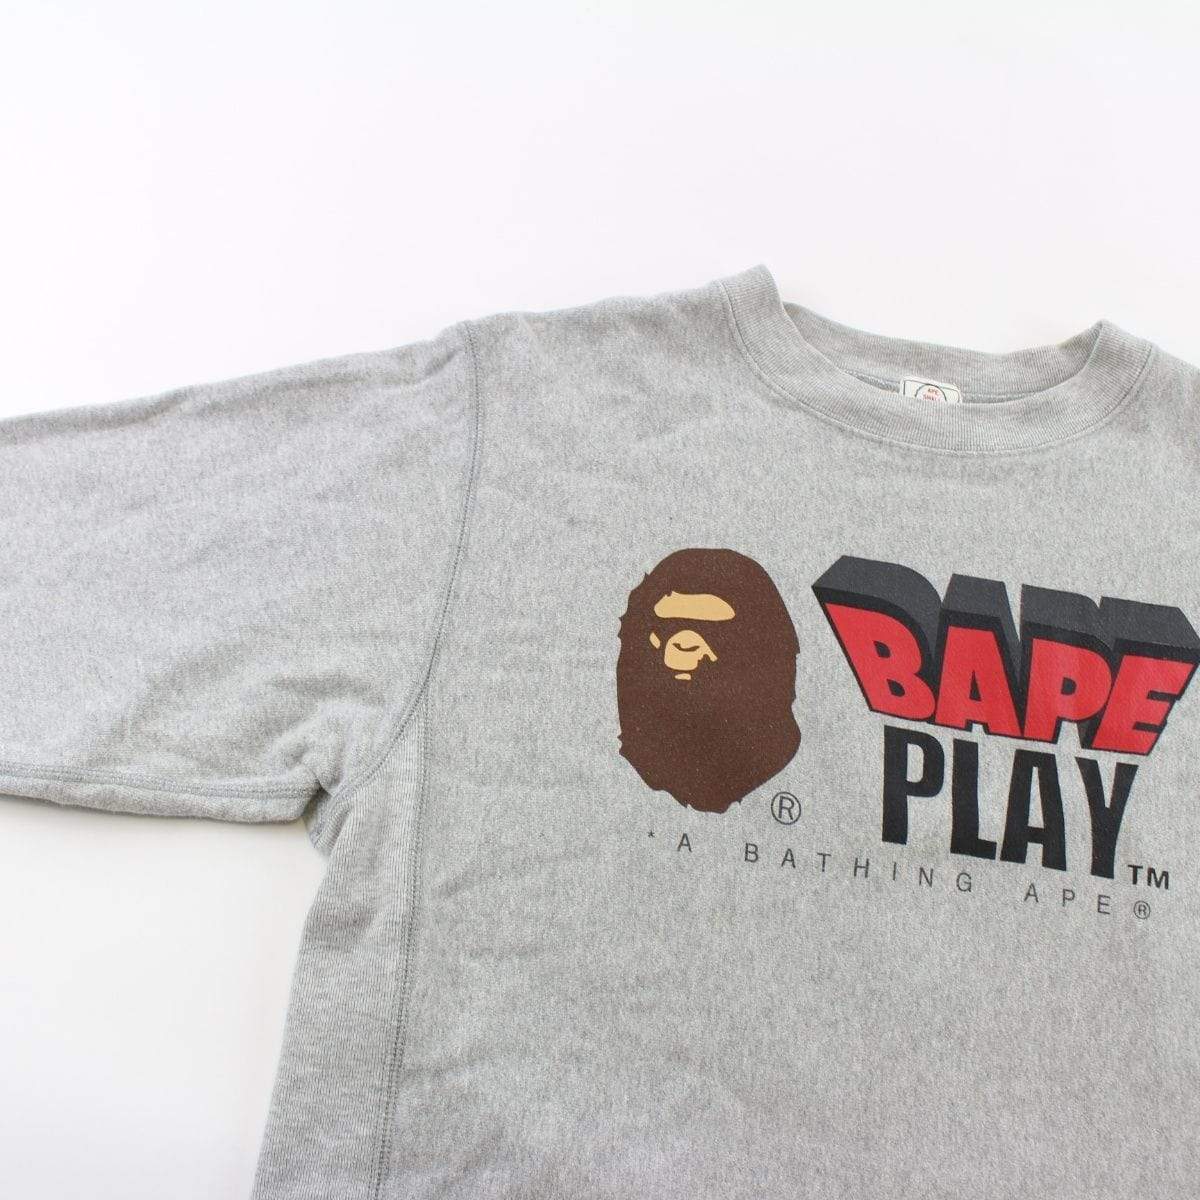 Bape Play Big Ape Crewneck Grey - SaruGeneral